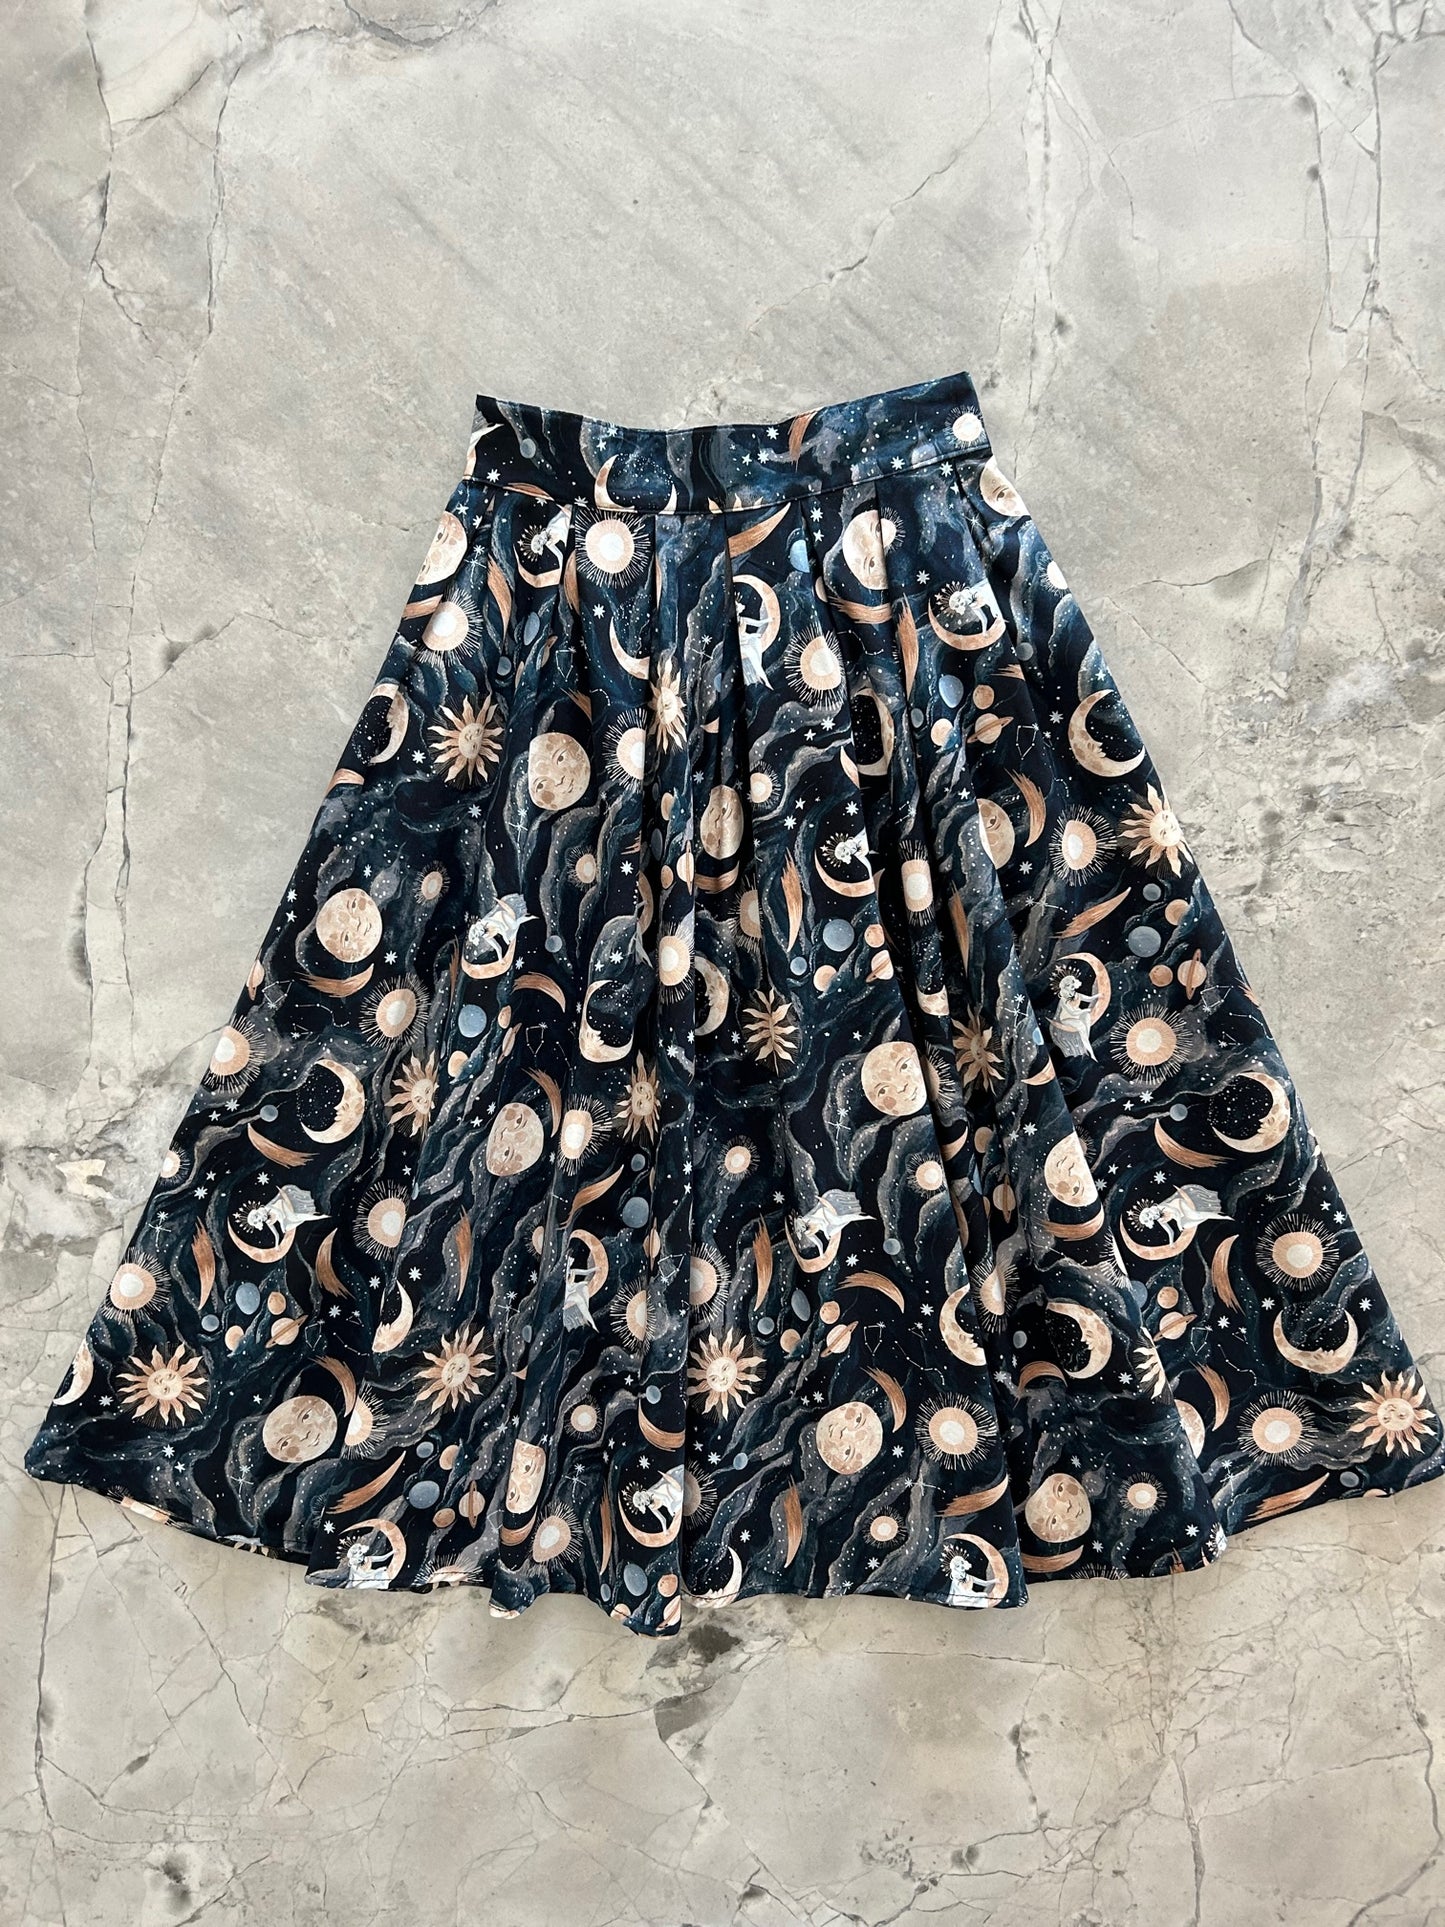 flat lay of luna doris skirt